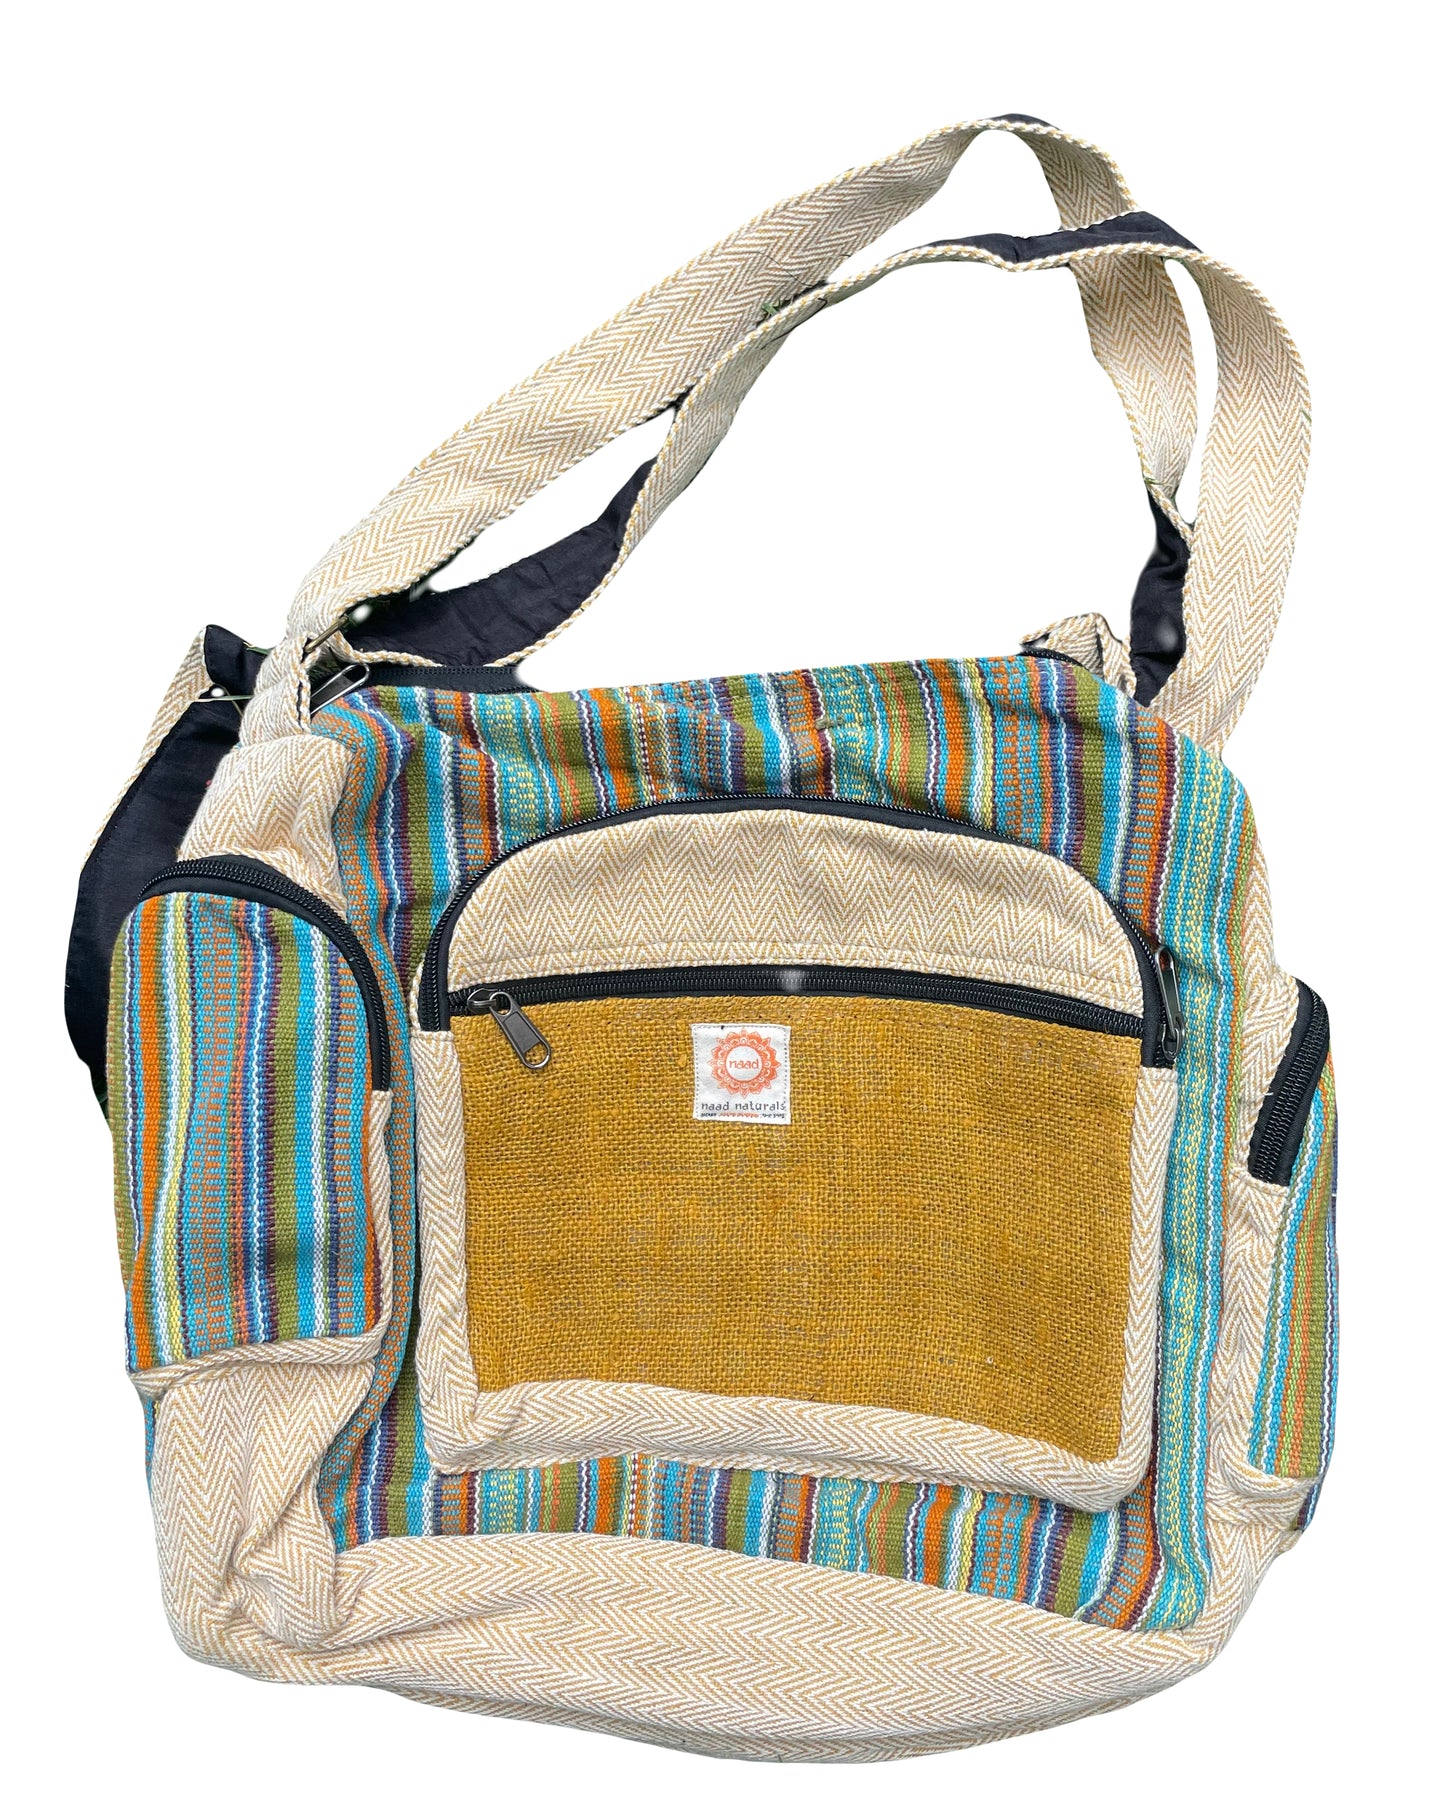 Hemp Shoulder Bag - Handmade